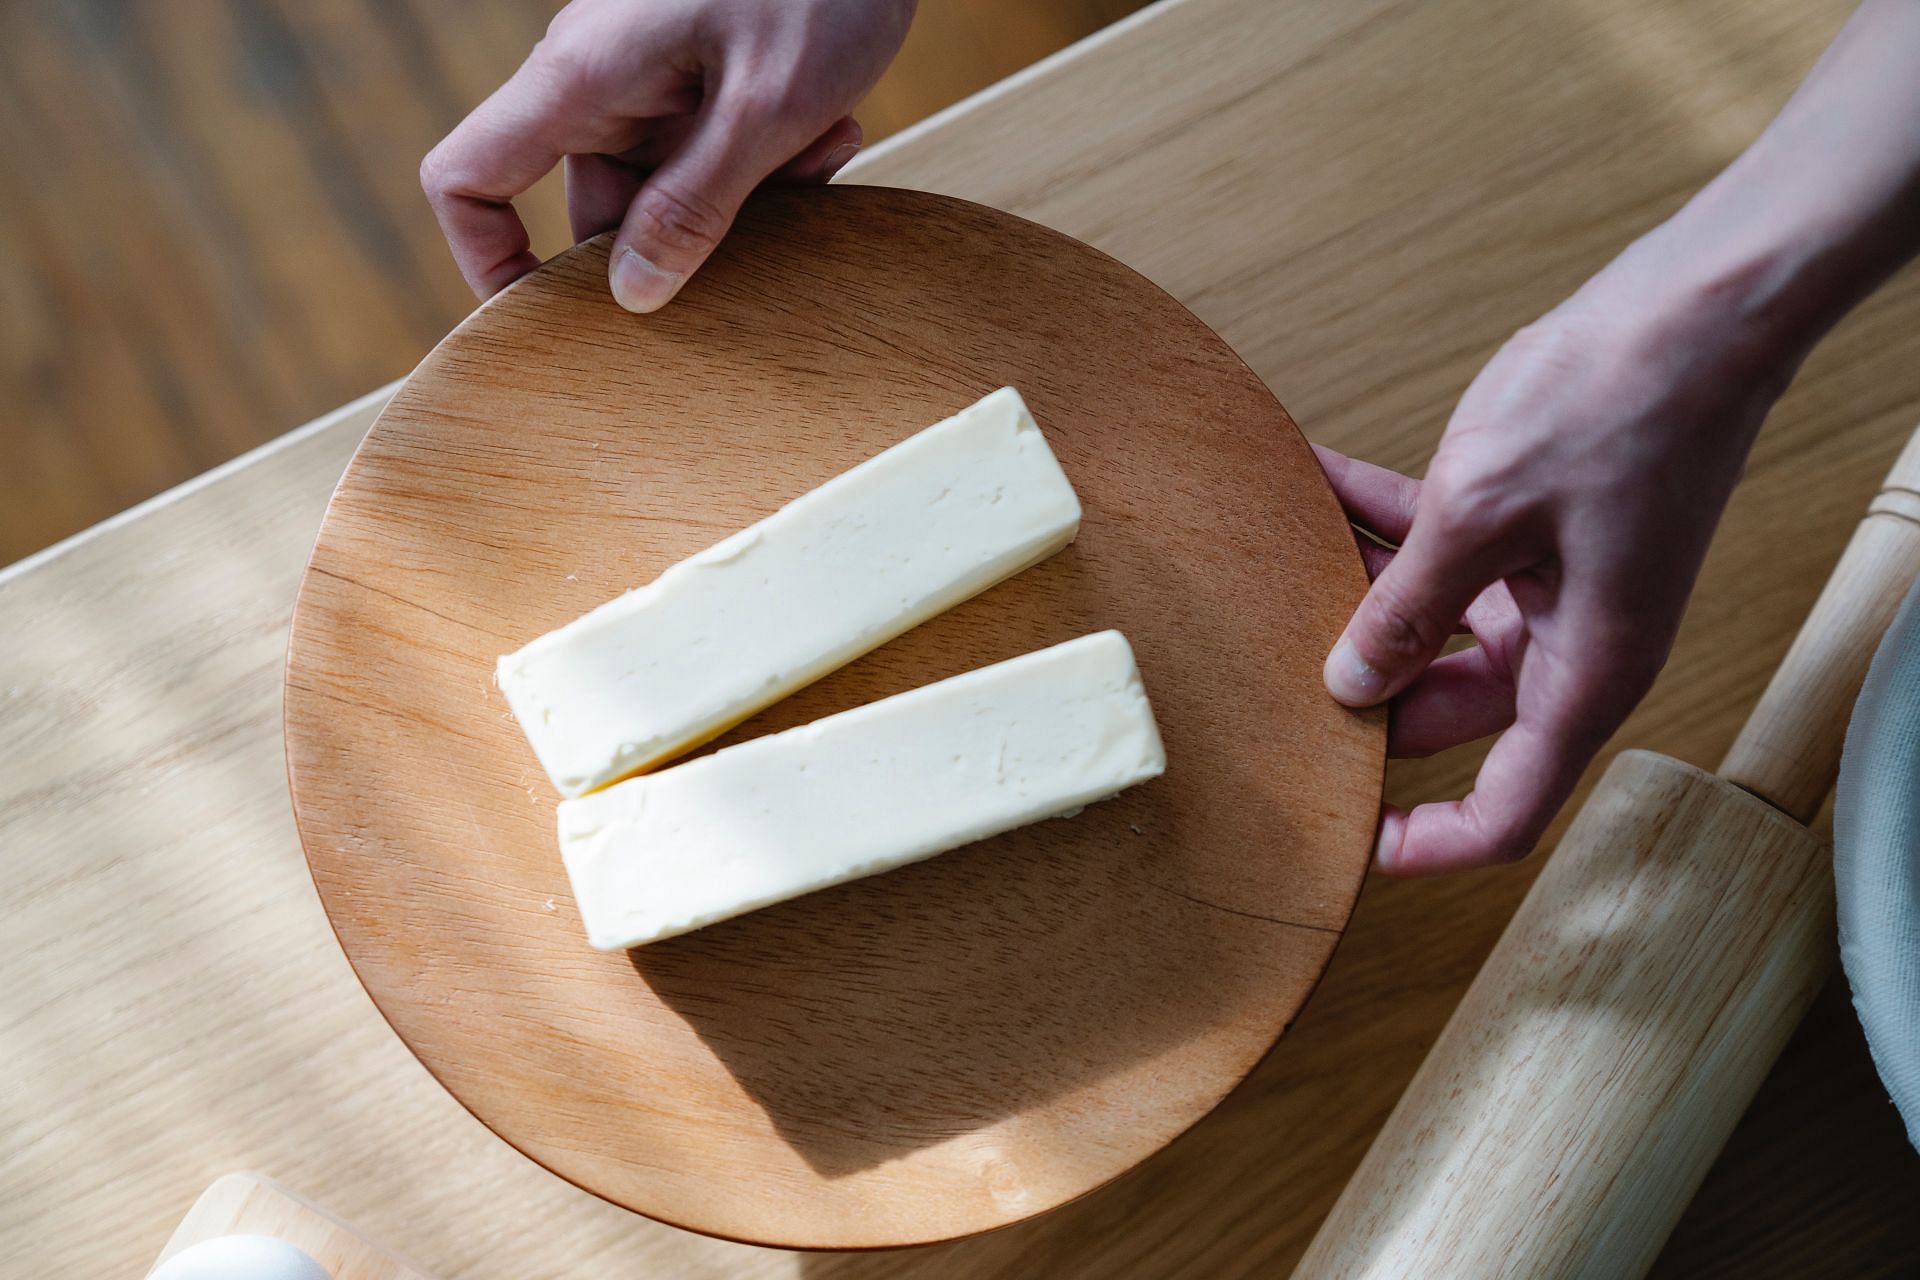 Shea butter offers various benefits. (Image via Pexels/Felicity Tai)